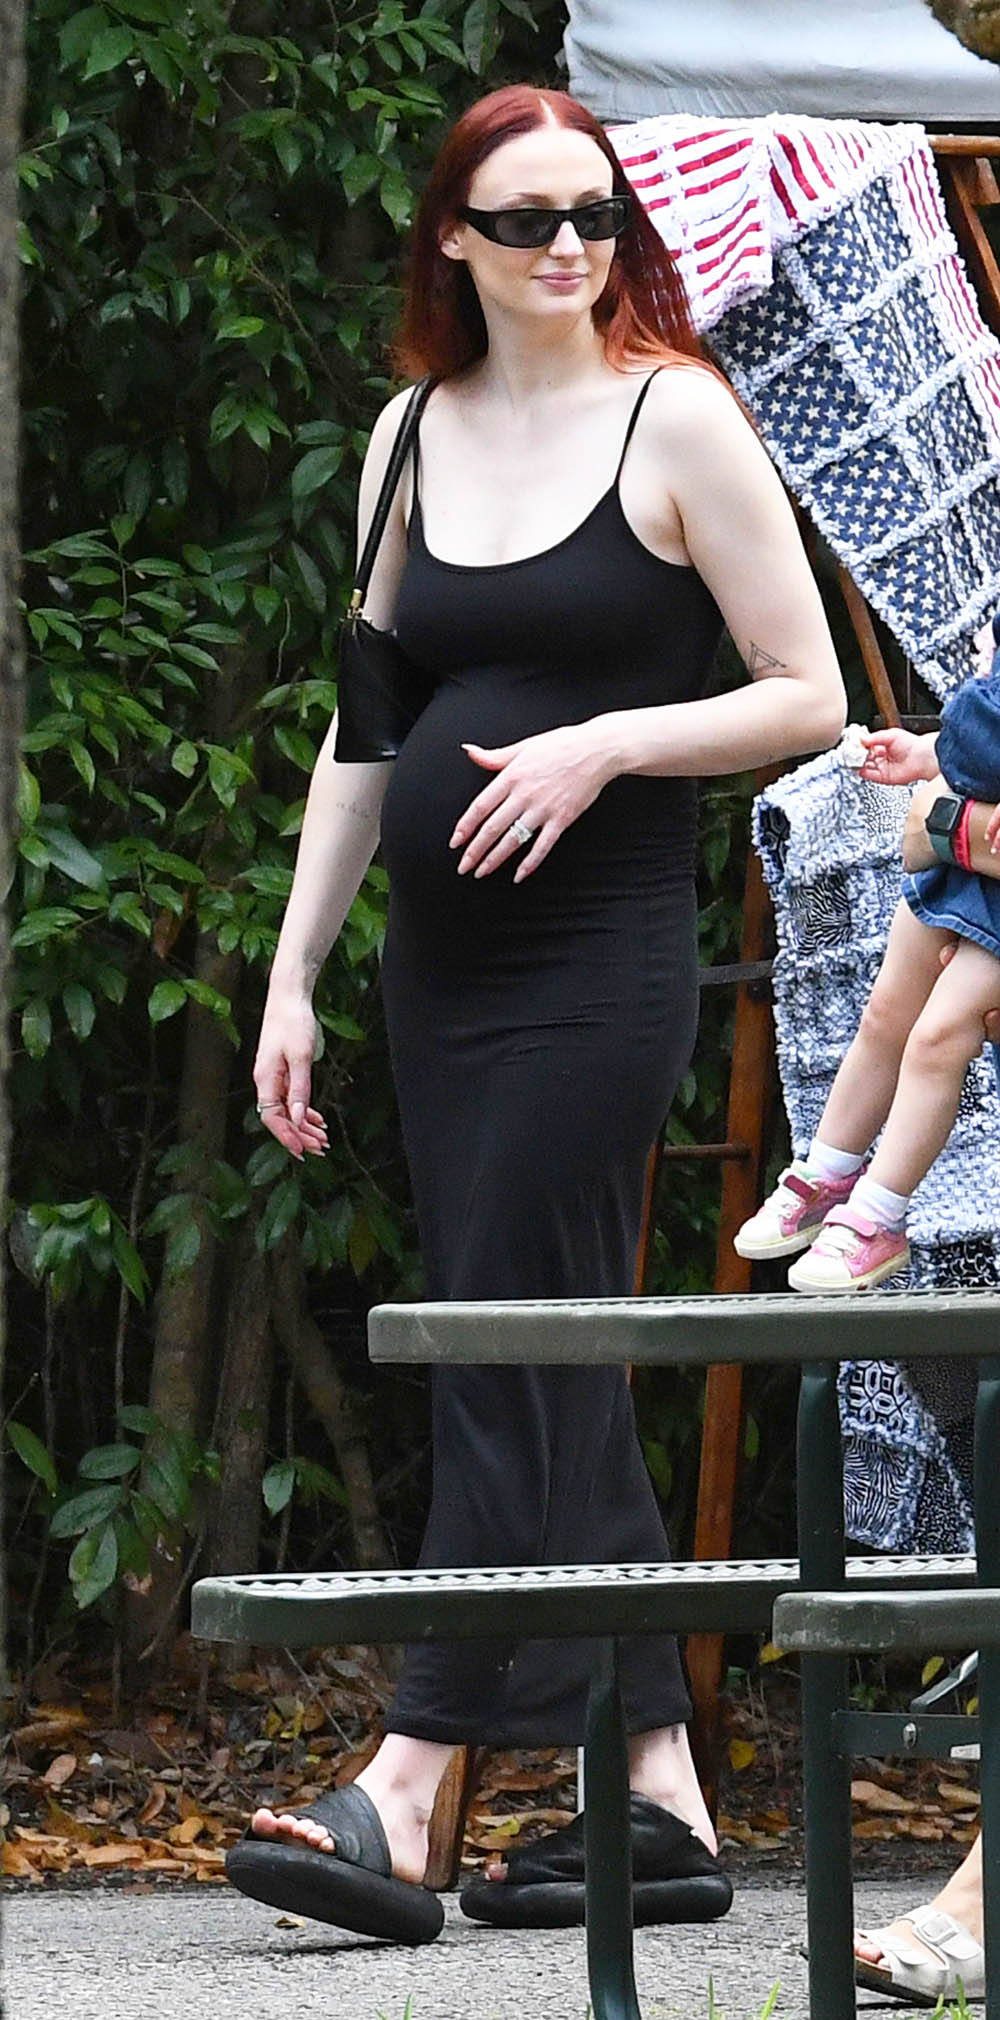 Game of Thrones star Sophie Turner unveils baby bump at Met Gala 2022, Celebrity News, Showbiz & TV